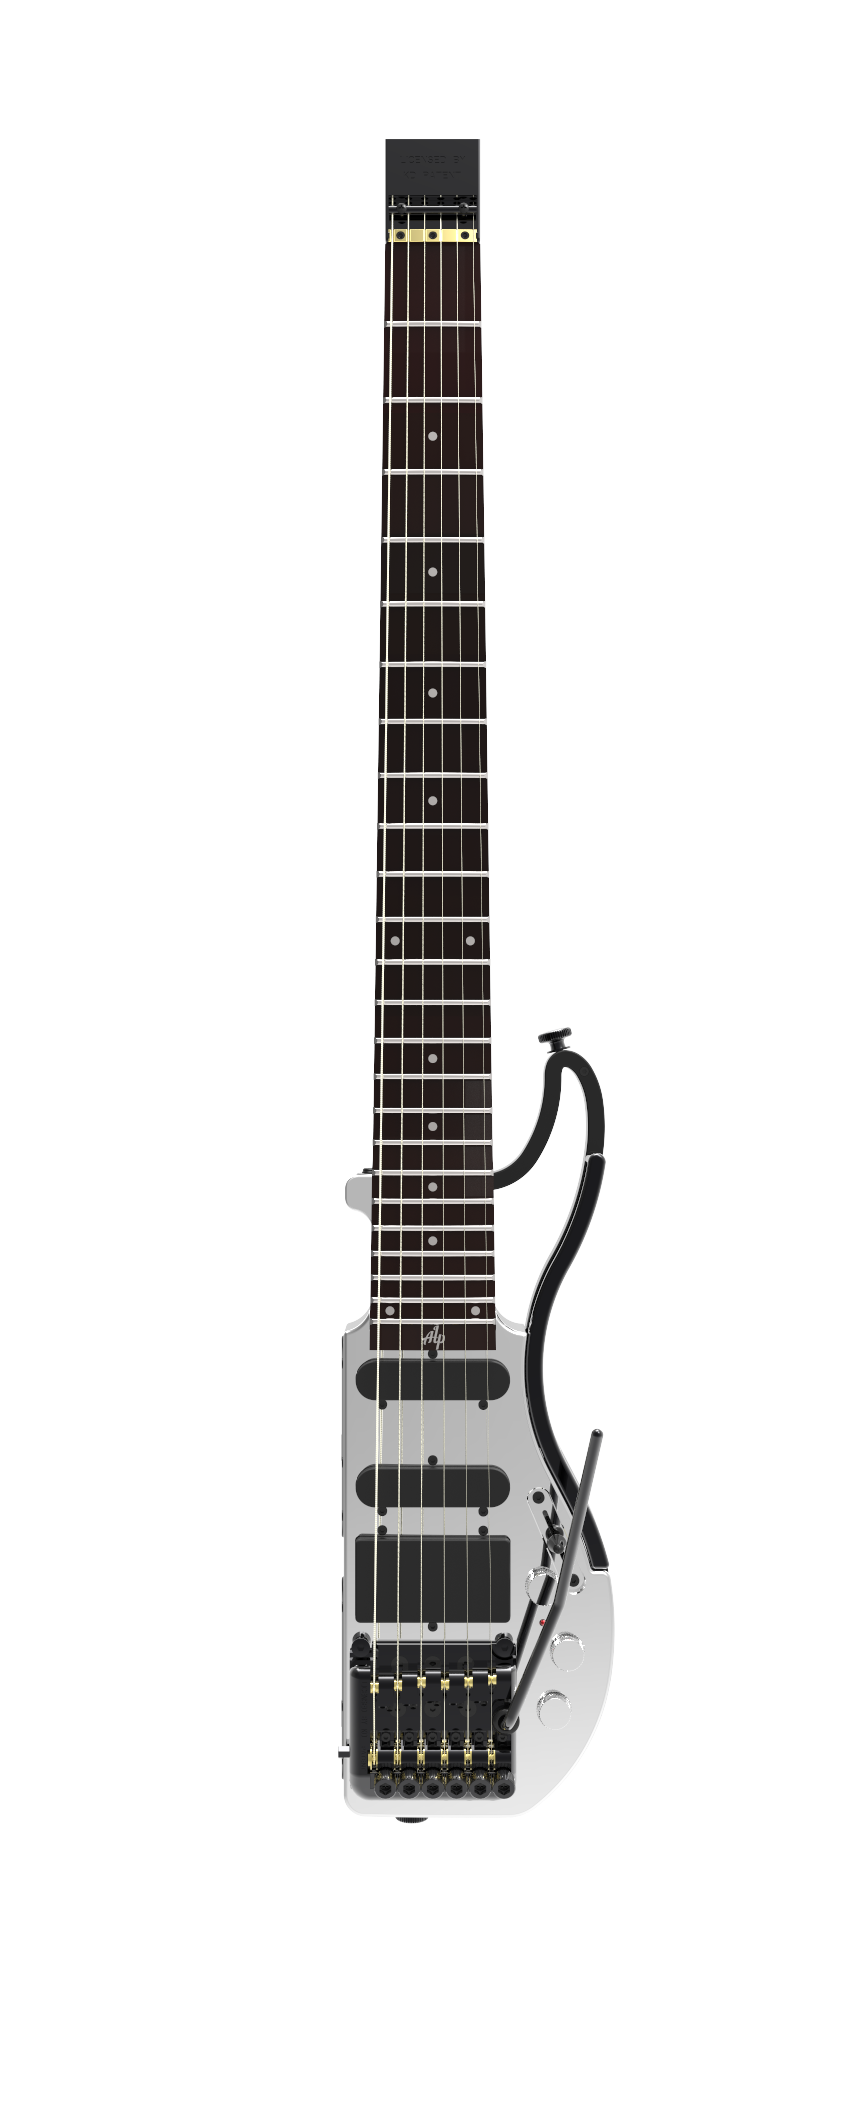 Multi-Neck Guitar Free PNG